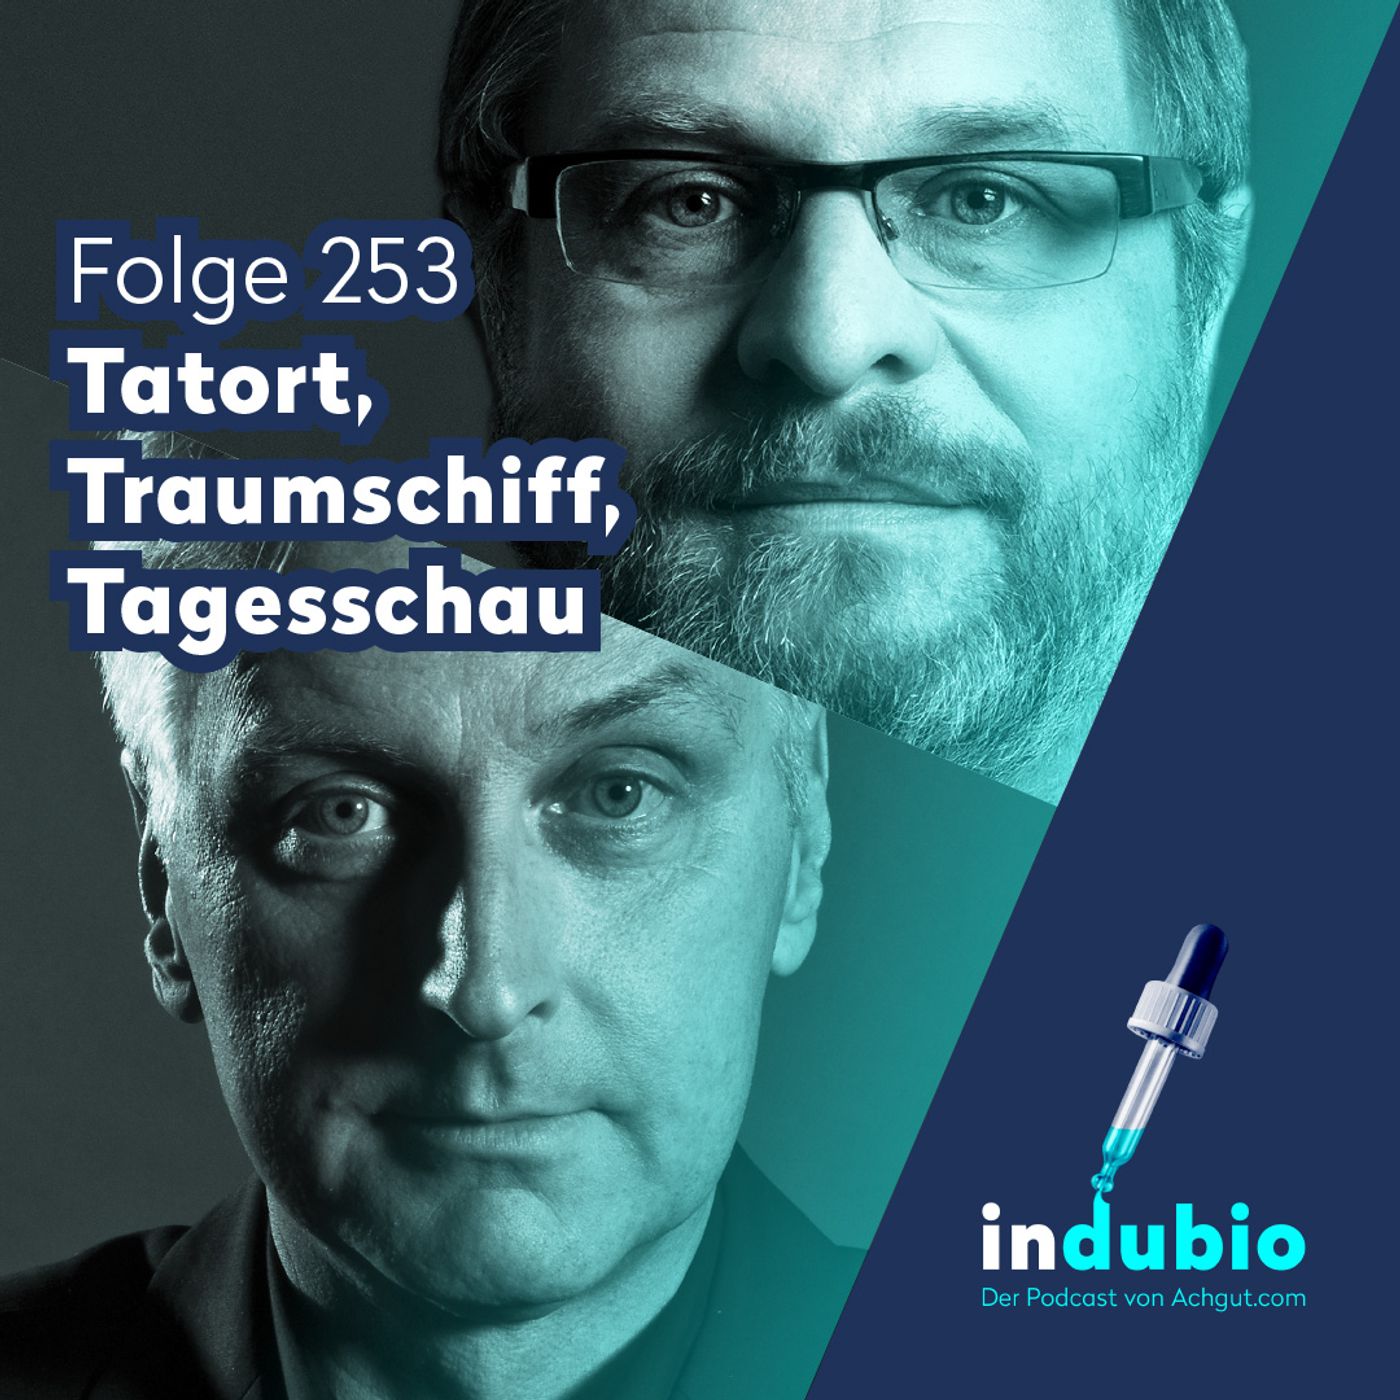 Flg. 253 - Tatort, Traumschiff, Tagesschau